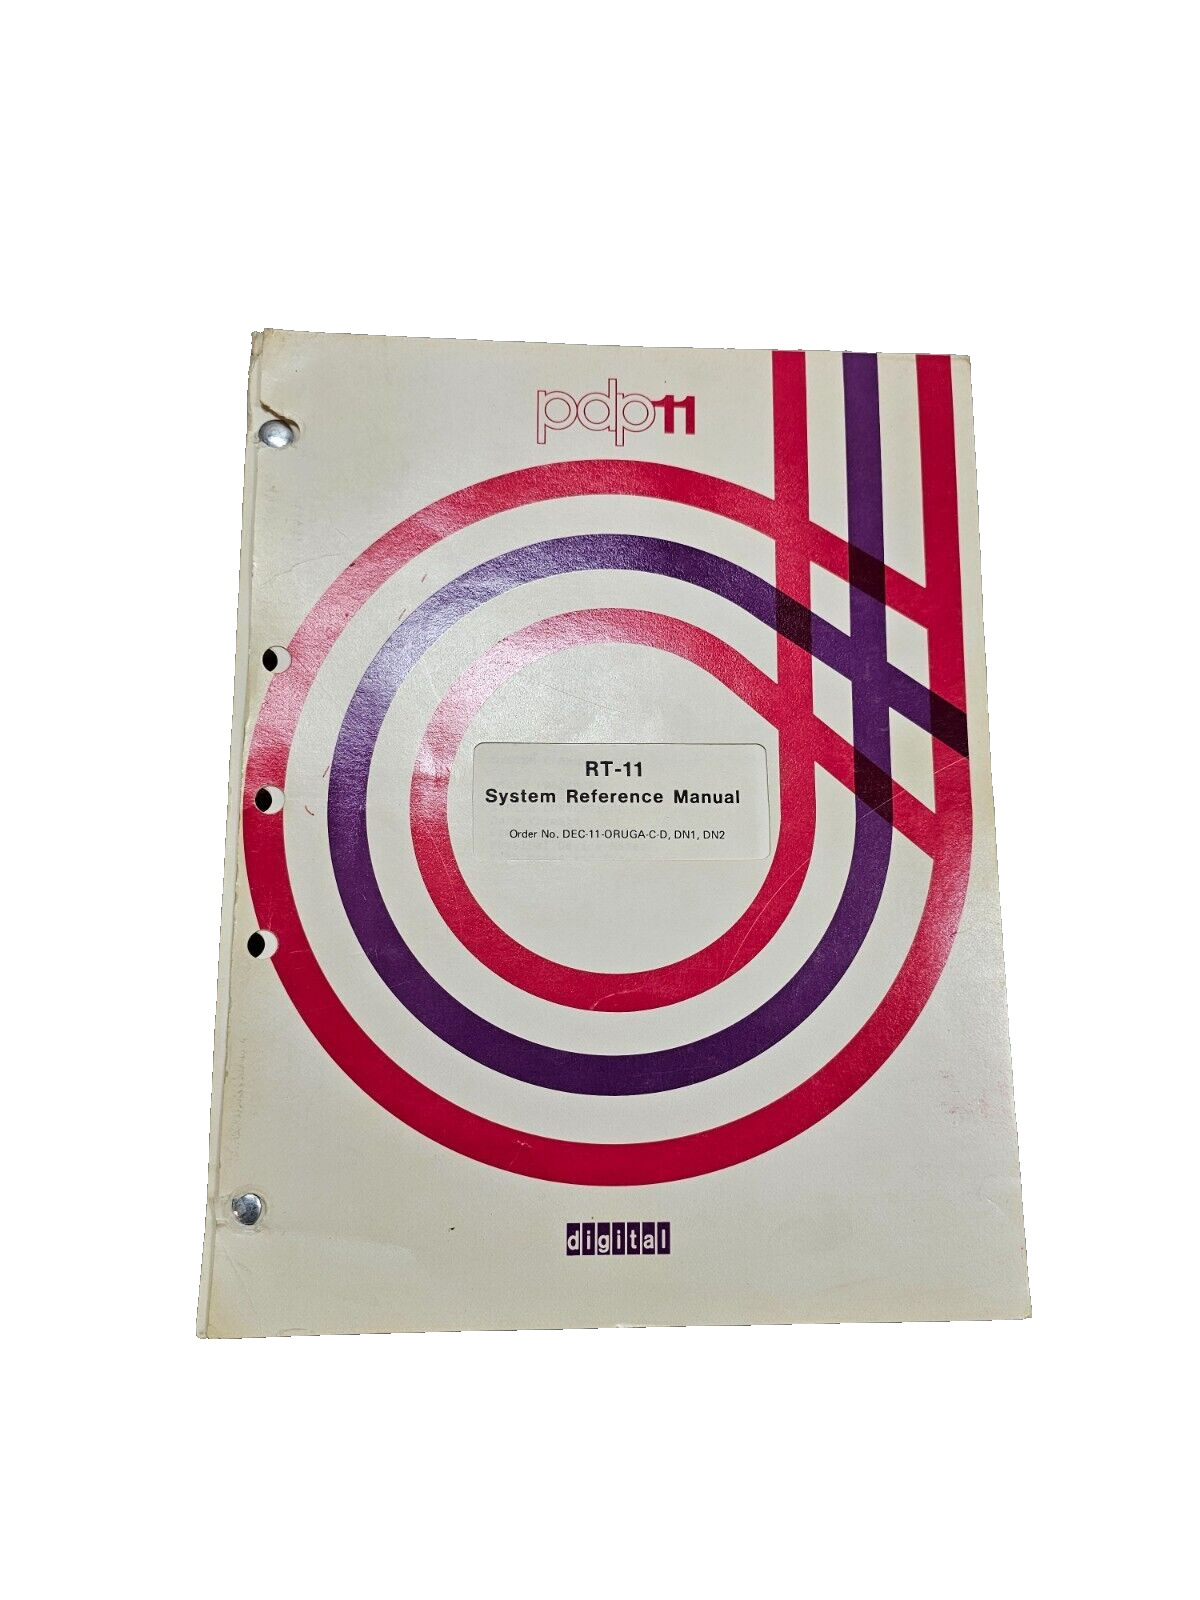 Vintage 1976 PDP RT-11 System Reference Manual DEC-11-ORUGA-C-D DN1 DN2